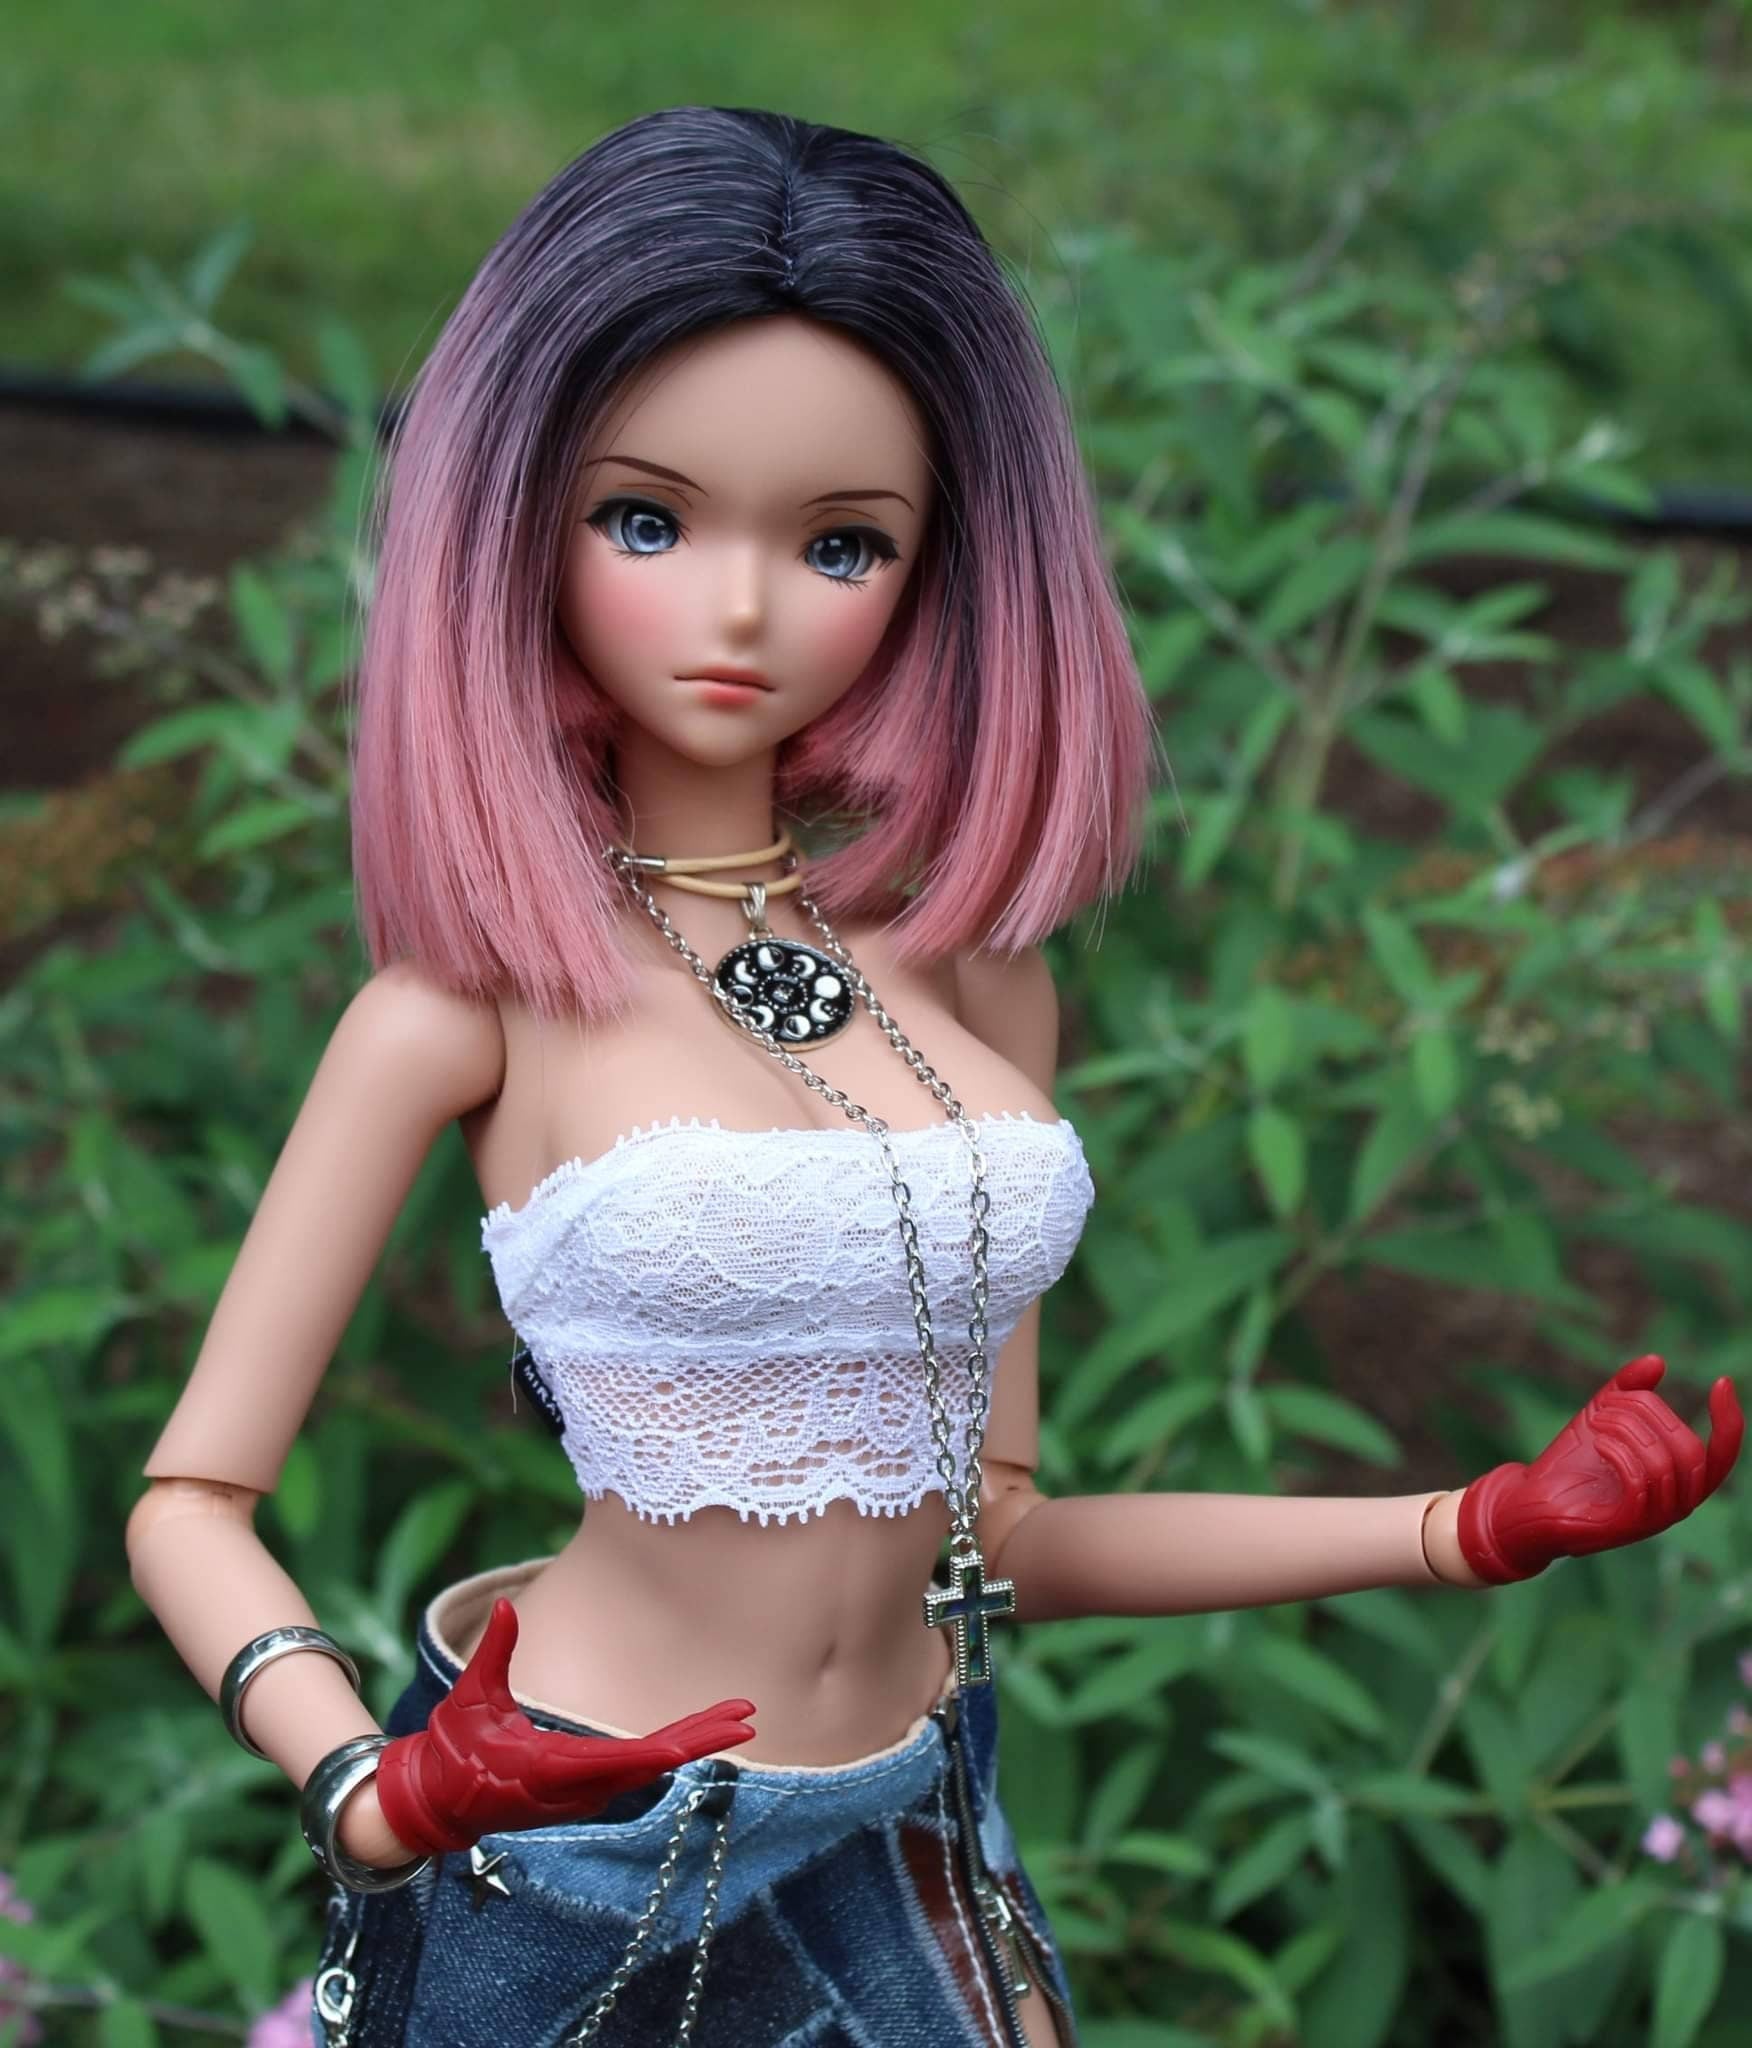 Custom doll Wig for Smart Dolls- "TAN CAPS" 8.5" head size of Bjd, SD, Dollfie Dream dolls  pink ombre